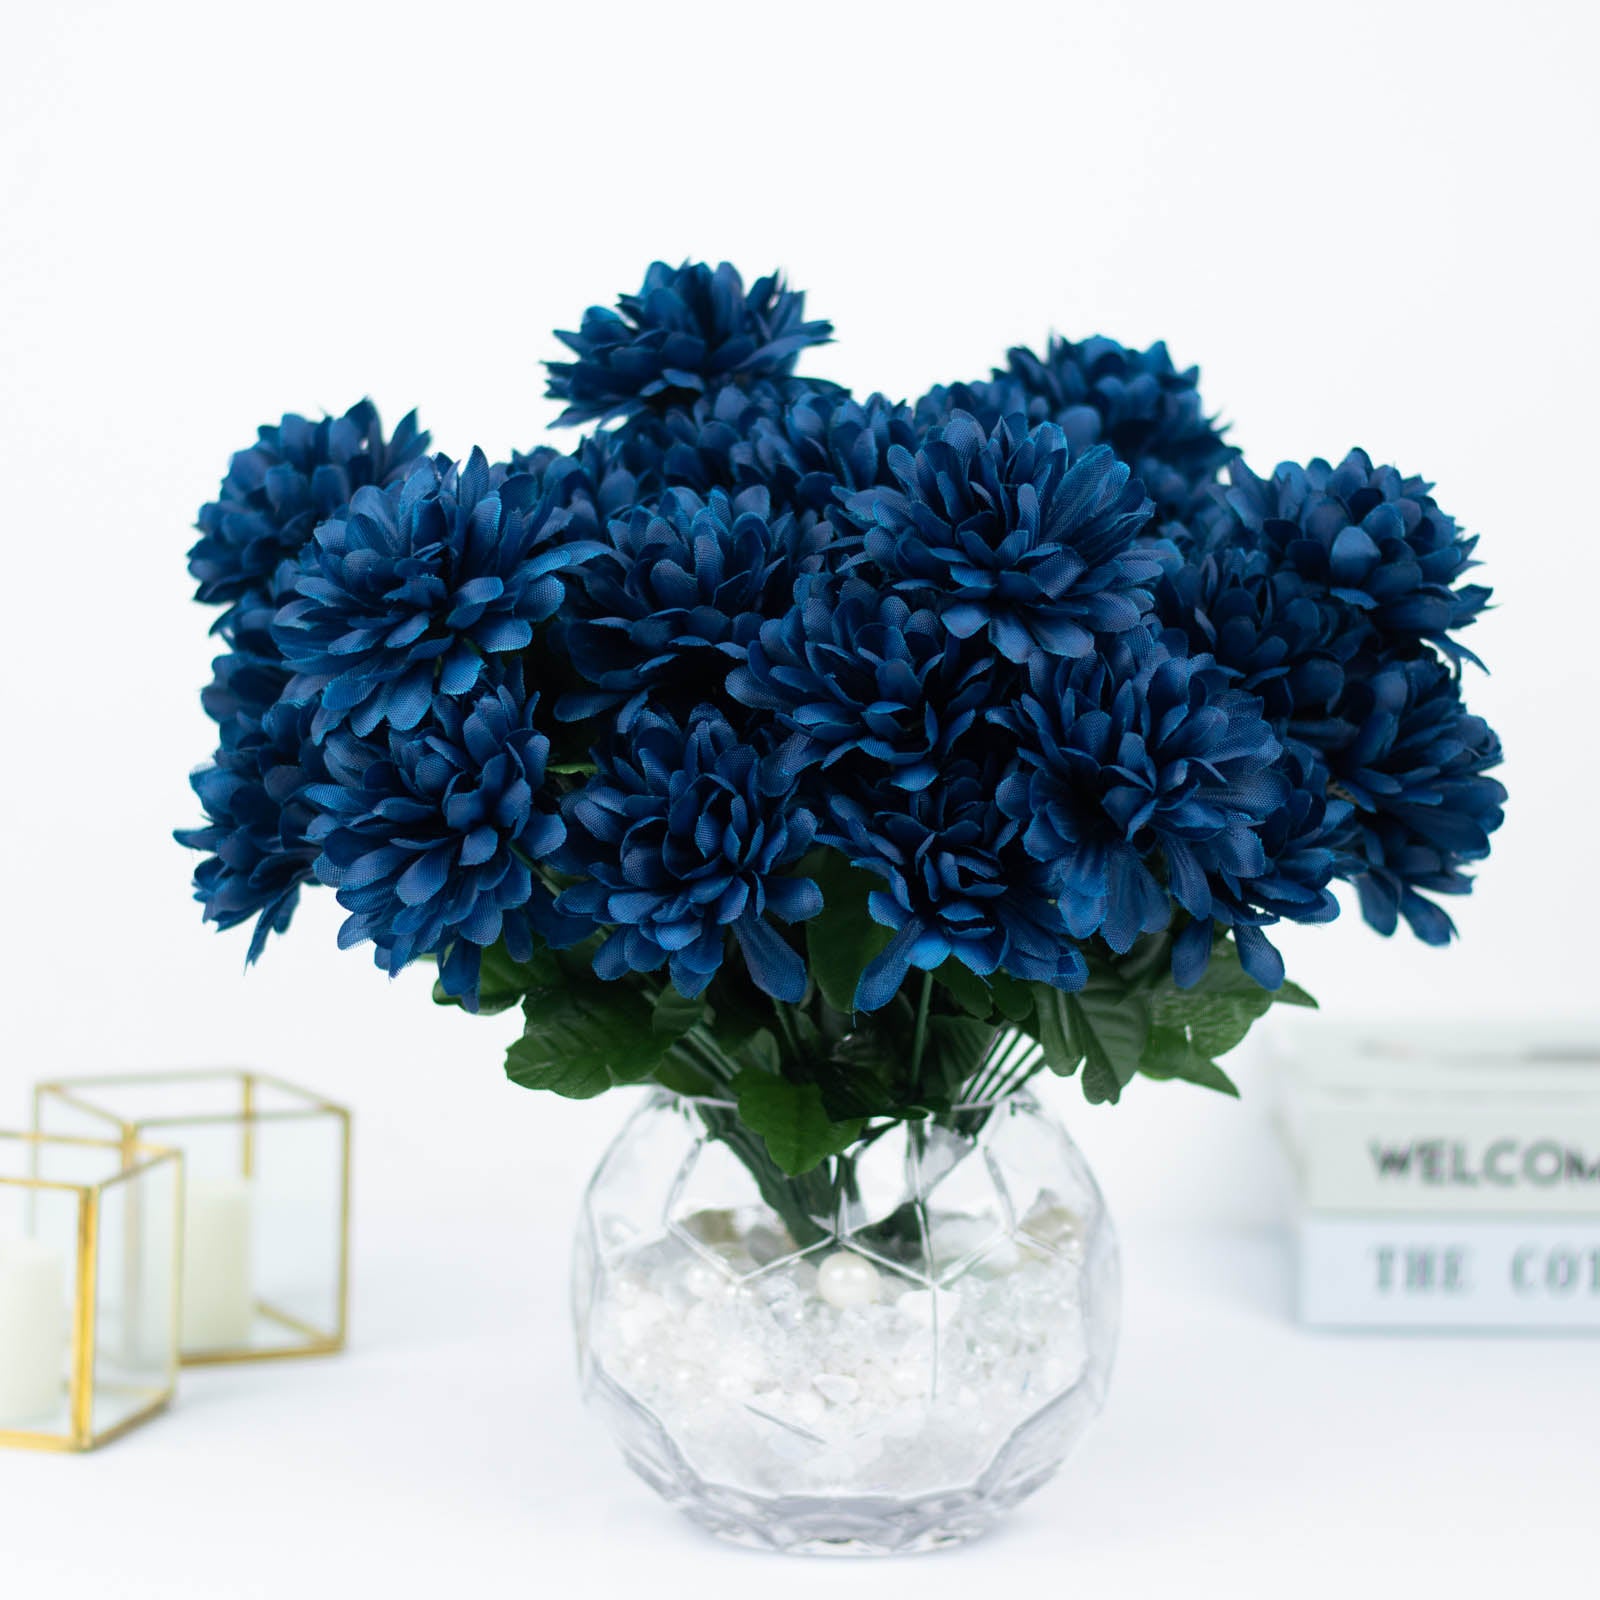 12 Bush 84 pcs Navy Blue Artificial Silk Chrysanthemum Flowers